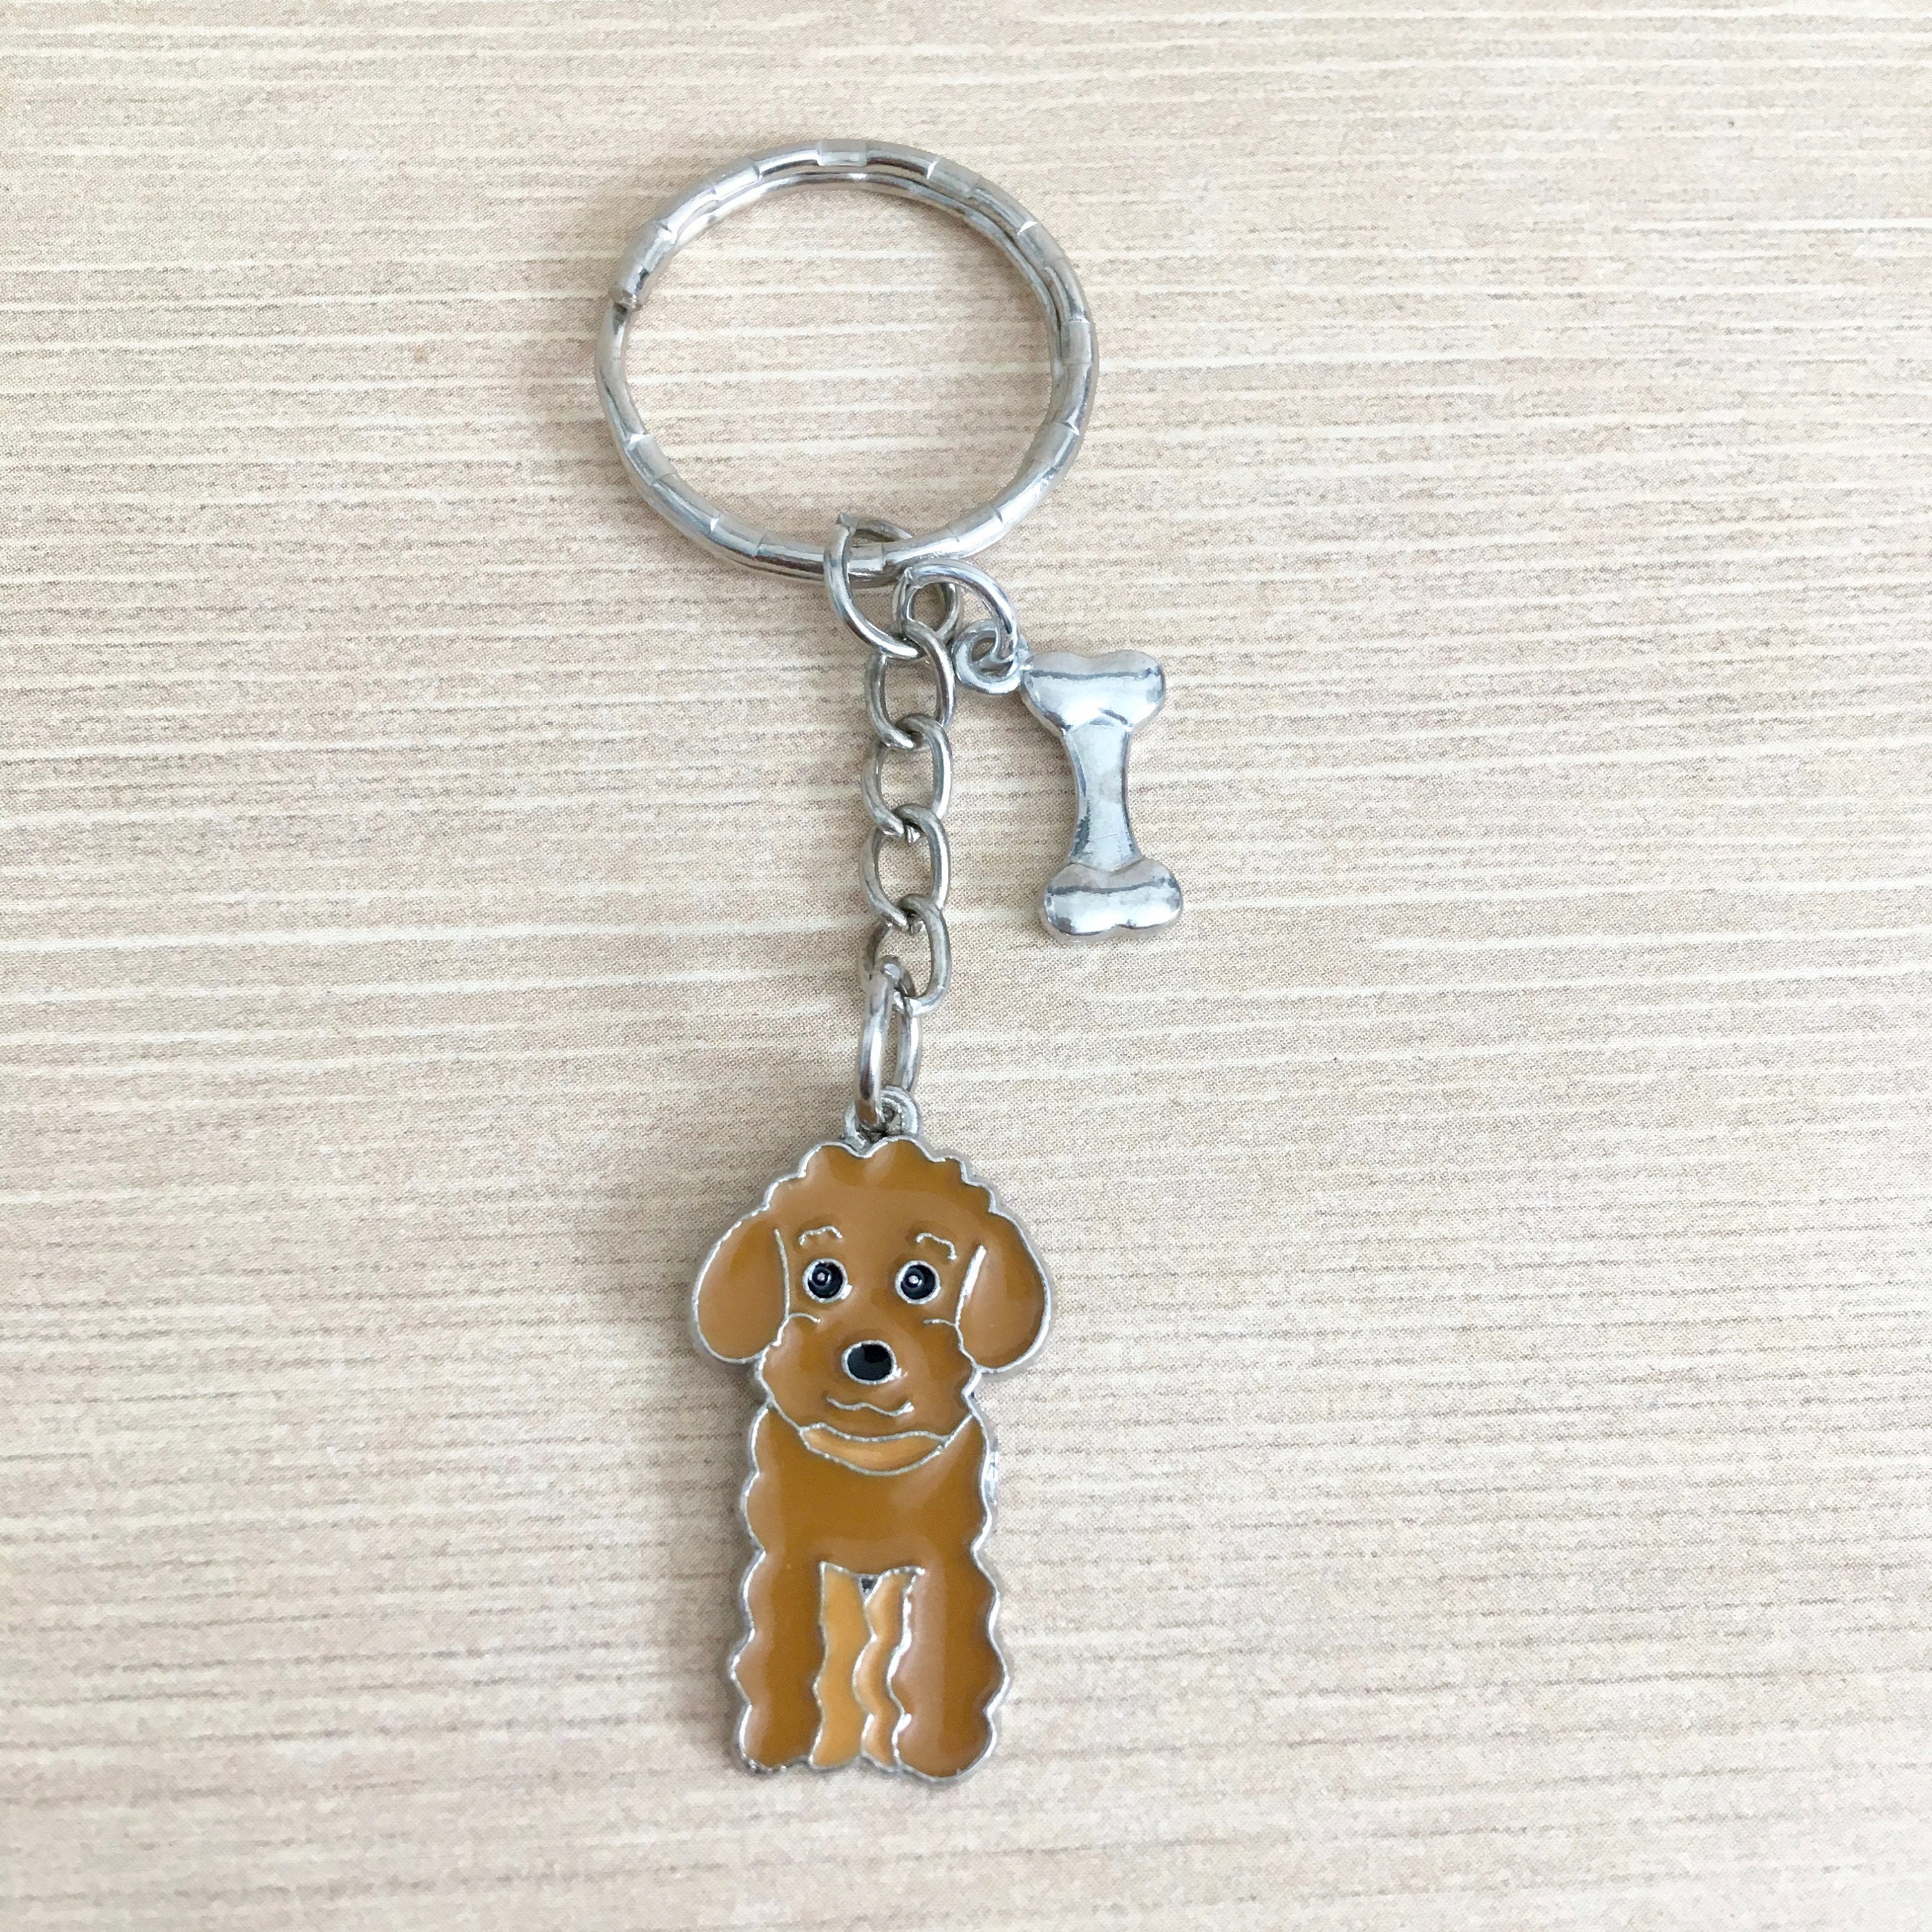 Poodle enamel charm key ring brown Poodle key ring dog | Etsy